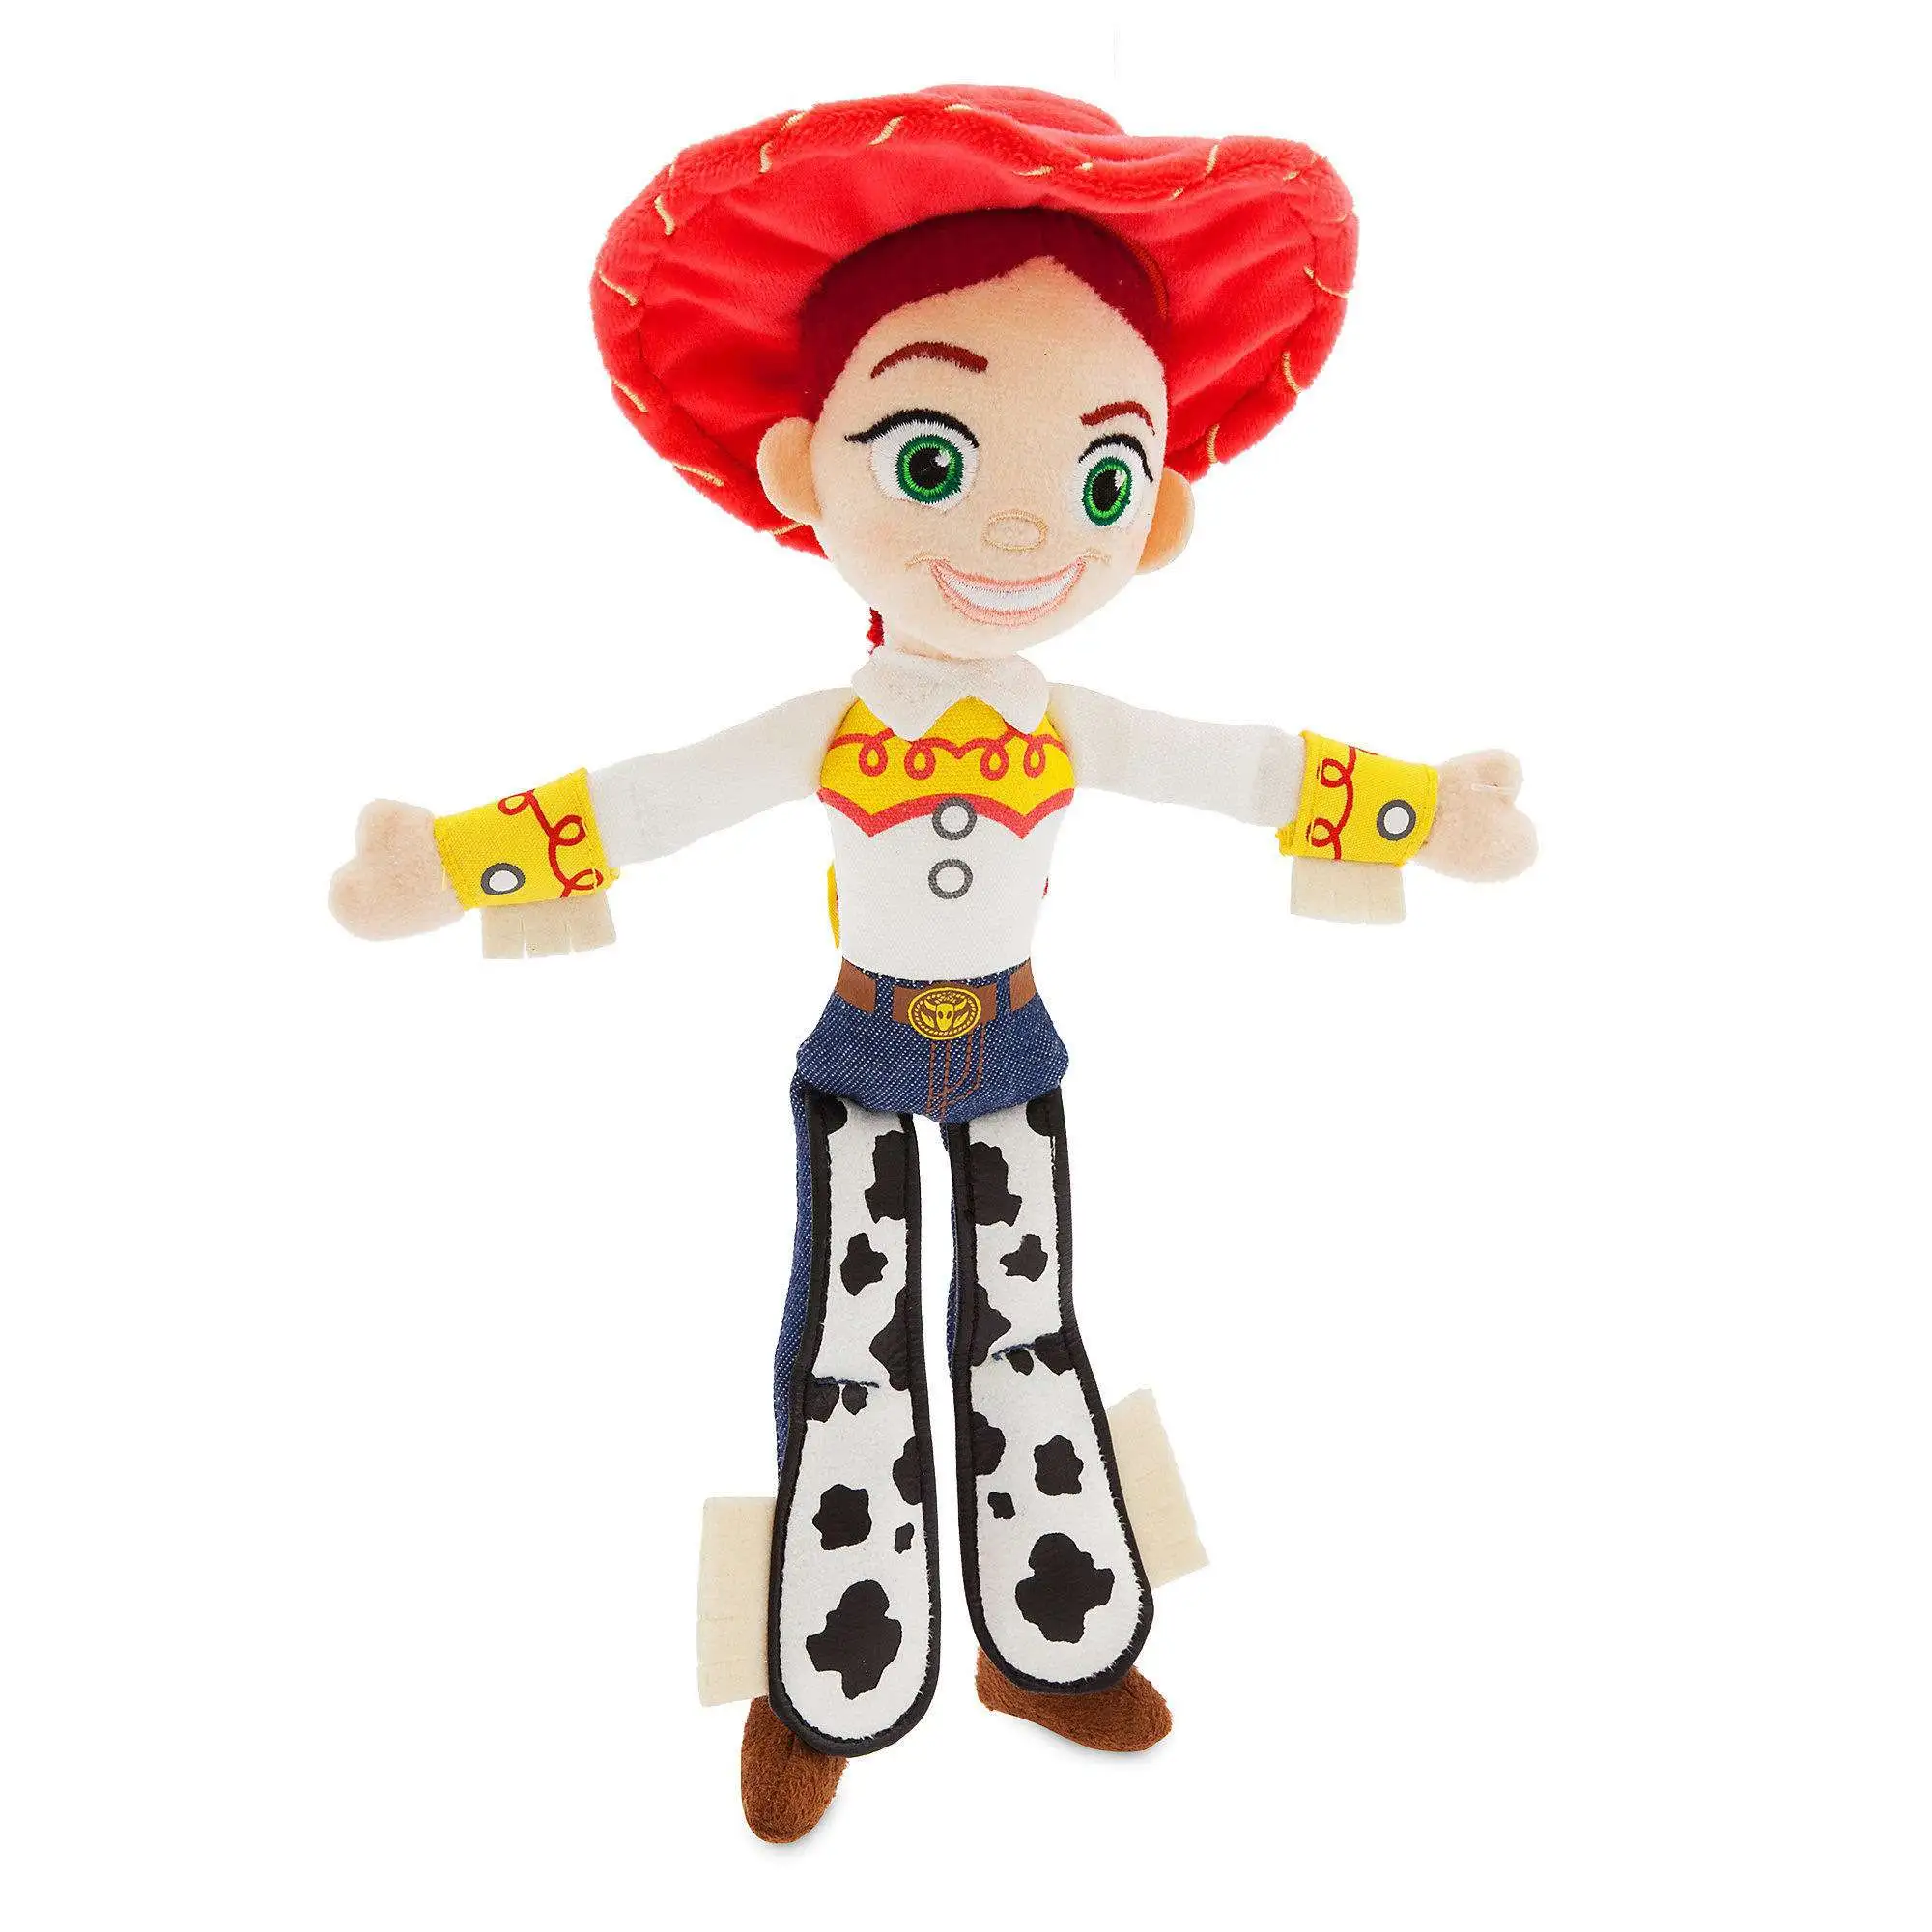 Toy Story 4 Woody Tsum Tsum Plush Doll mini S Disney Store Japan 